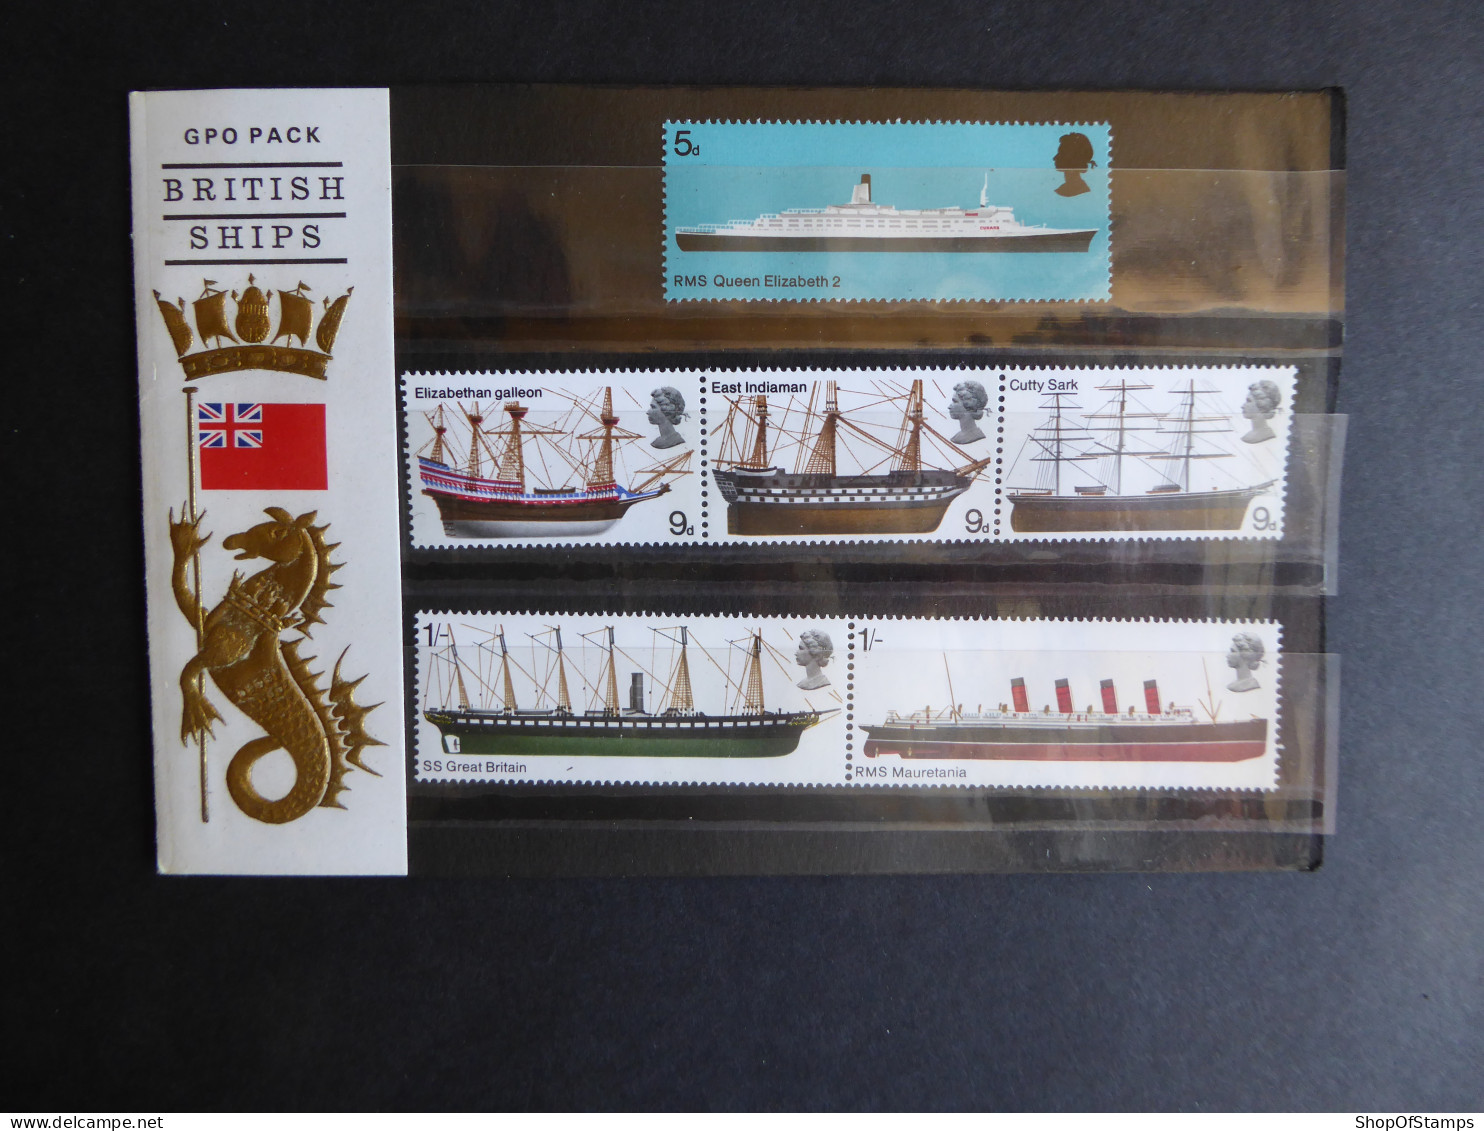 GREAT BRITAIN SG 778-83 BRITISH SHIPS PRESENTATION PACK - Sheets, Plate Blocks & Multiples